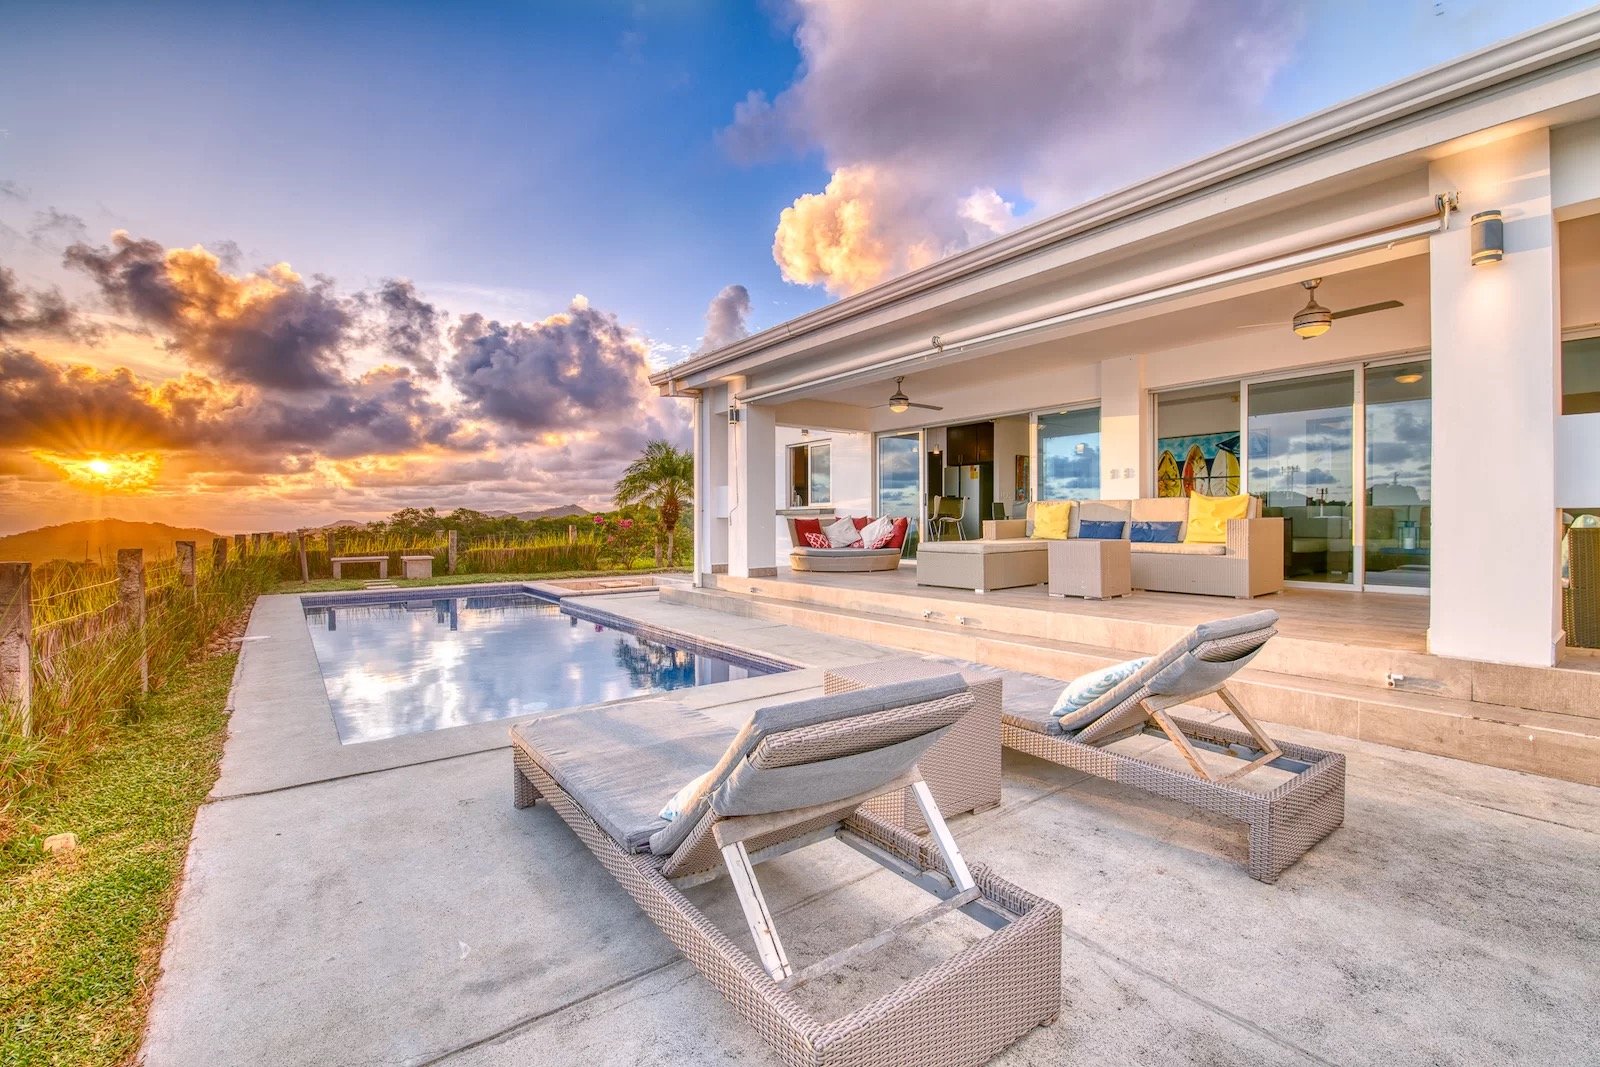 Luxury home for sale San Juan Del Sur Nicaragua Real estate property 29.jpeg